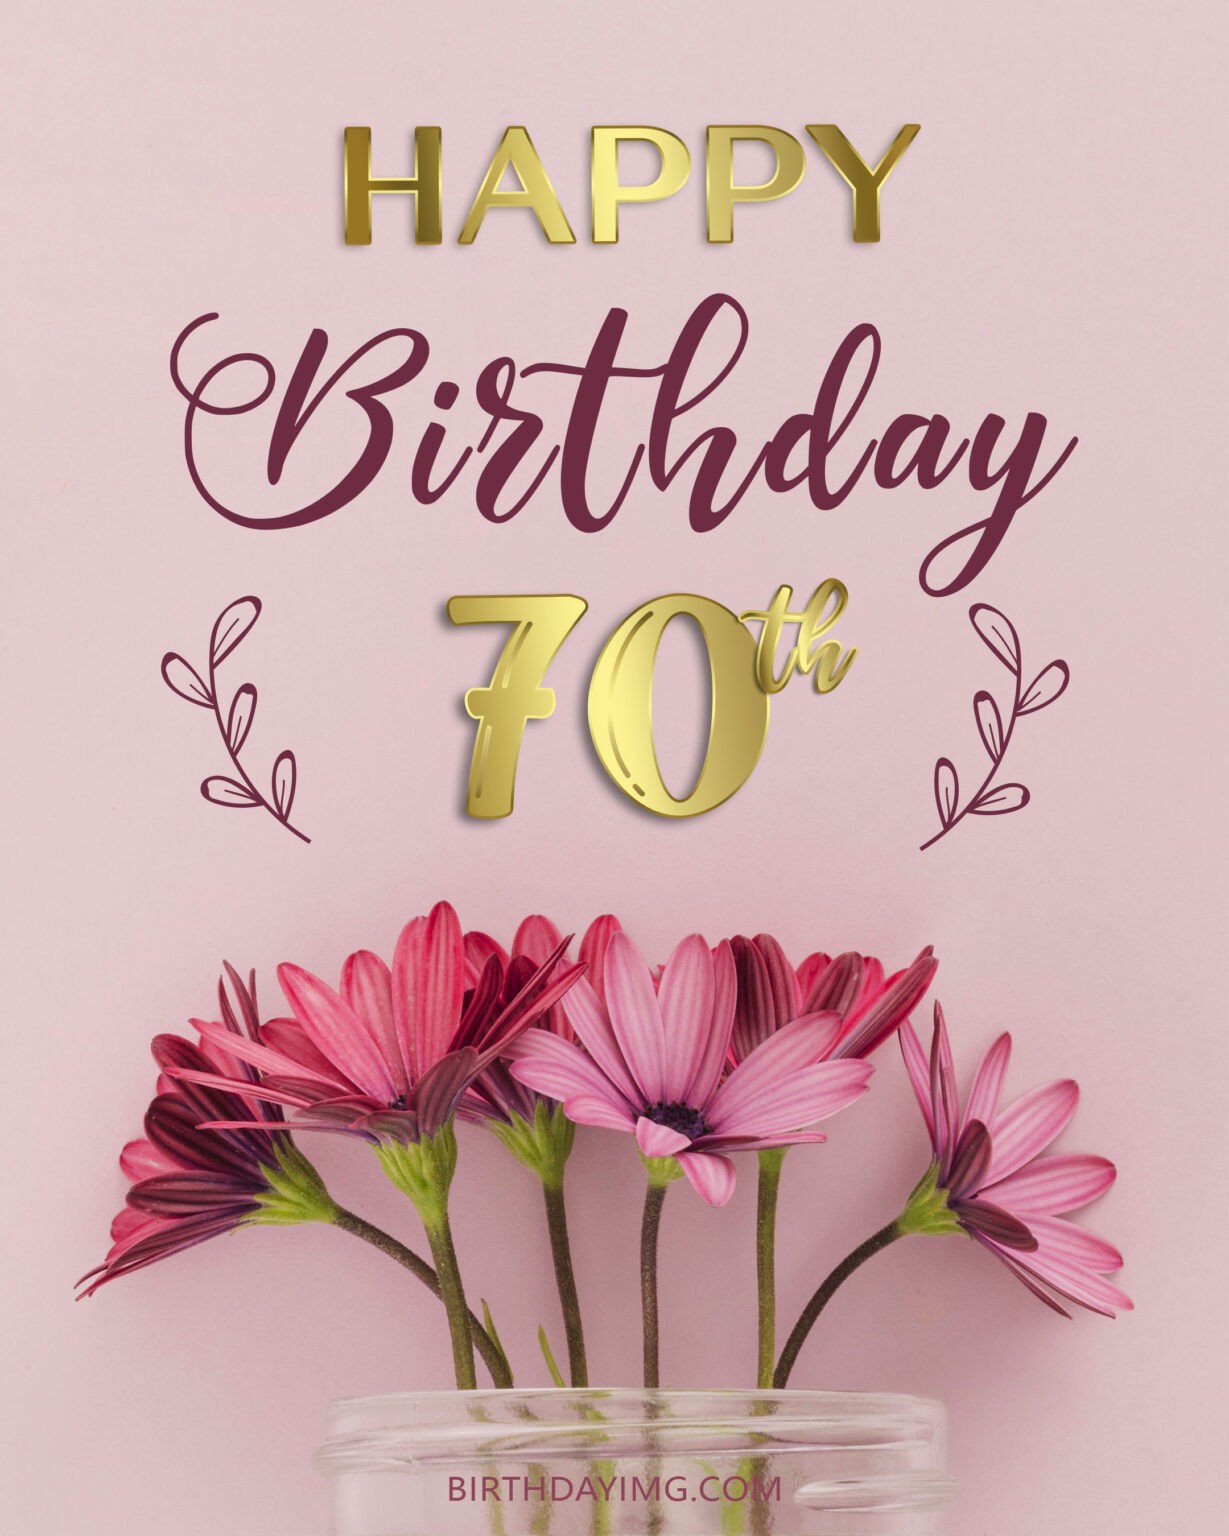 70th Years Free Happy Birthday Wishes And Images Birthdayimg